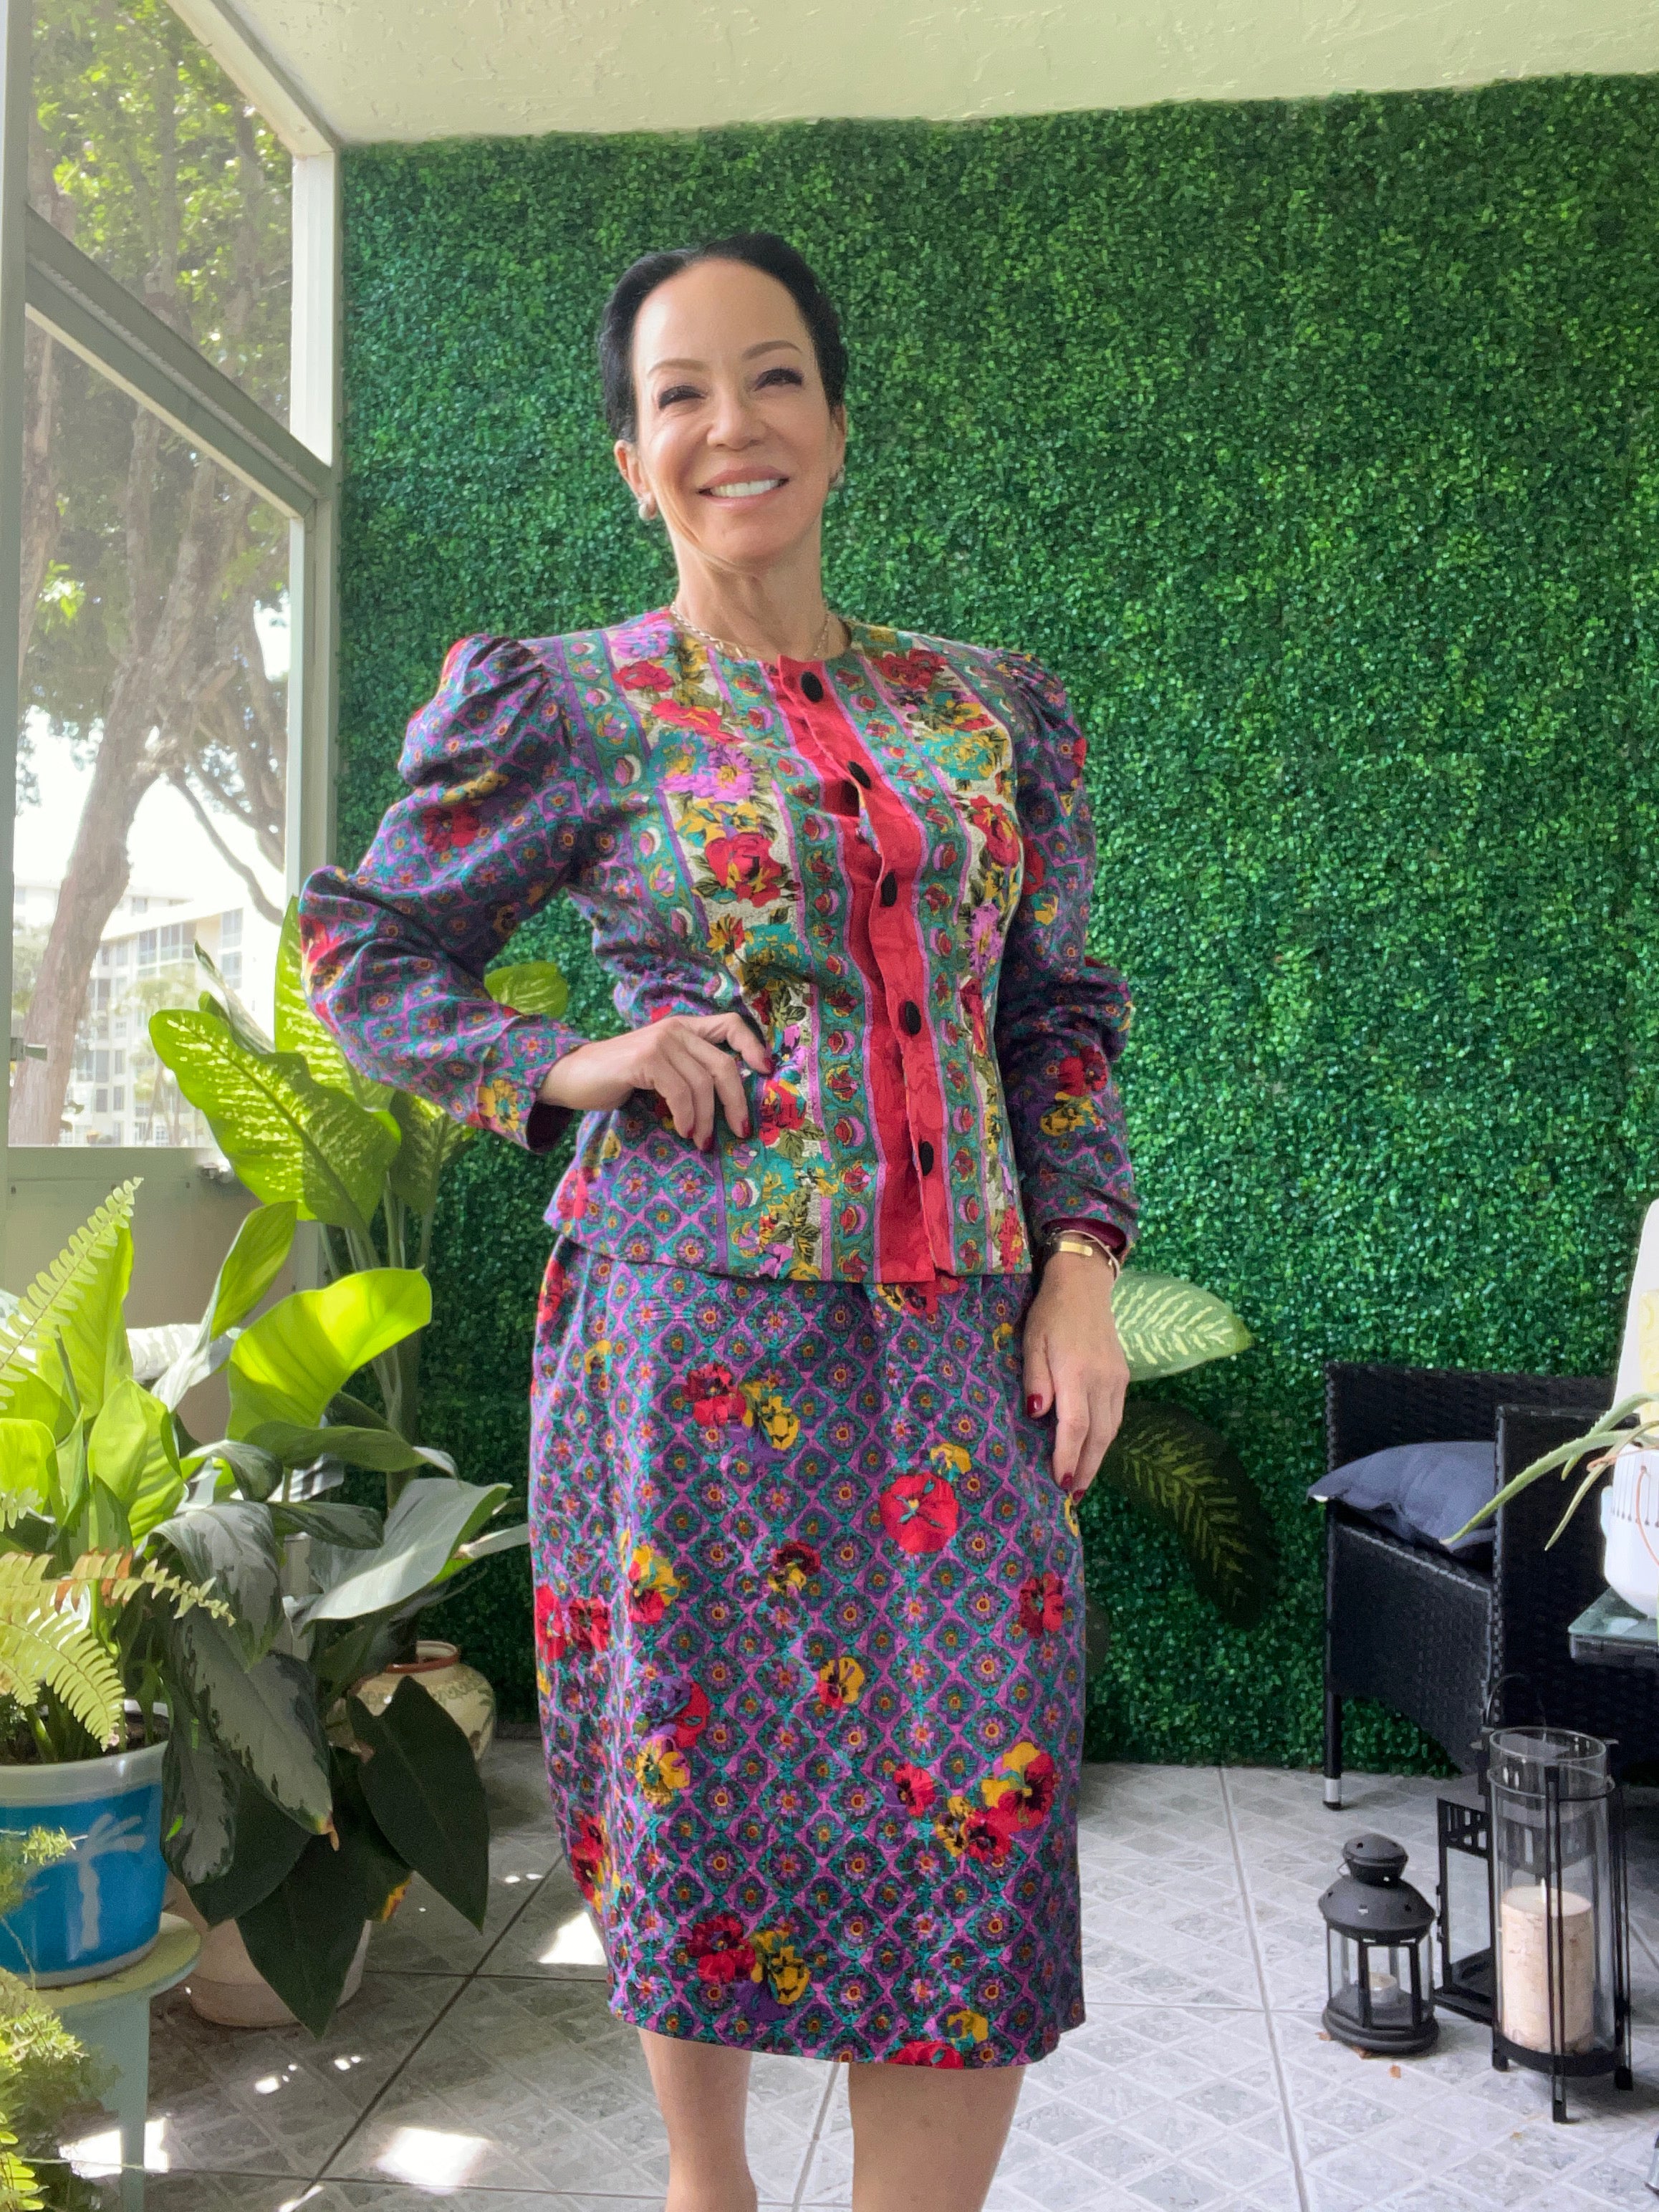 Rickie Freeman for Teri Jon vintage colorful floral silk suit skirt jacket Occasion Suit